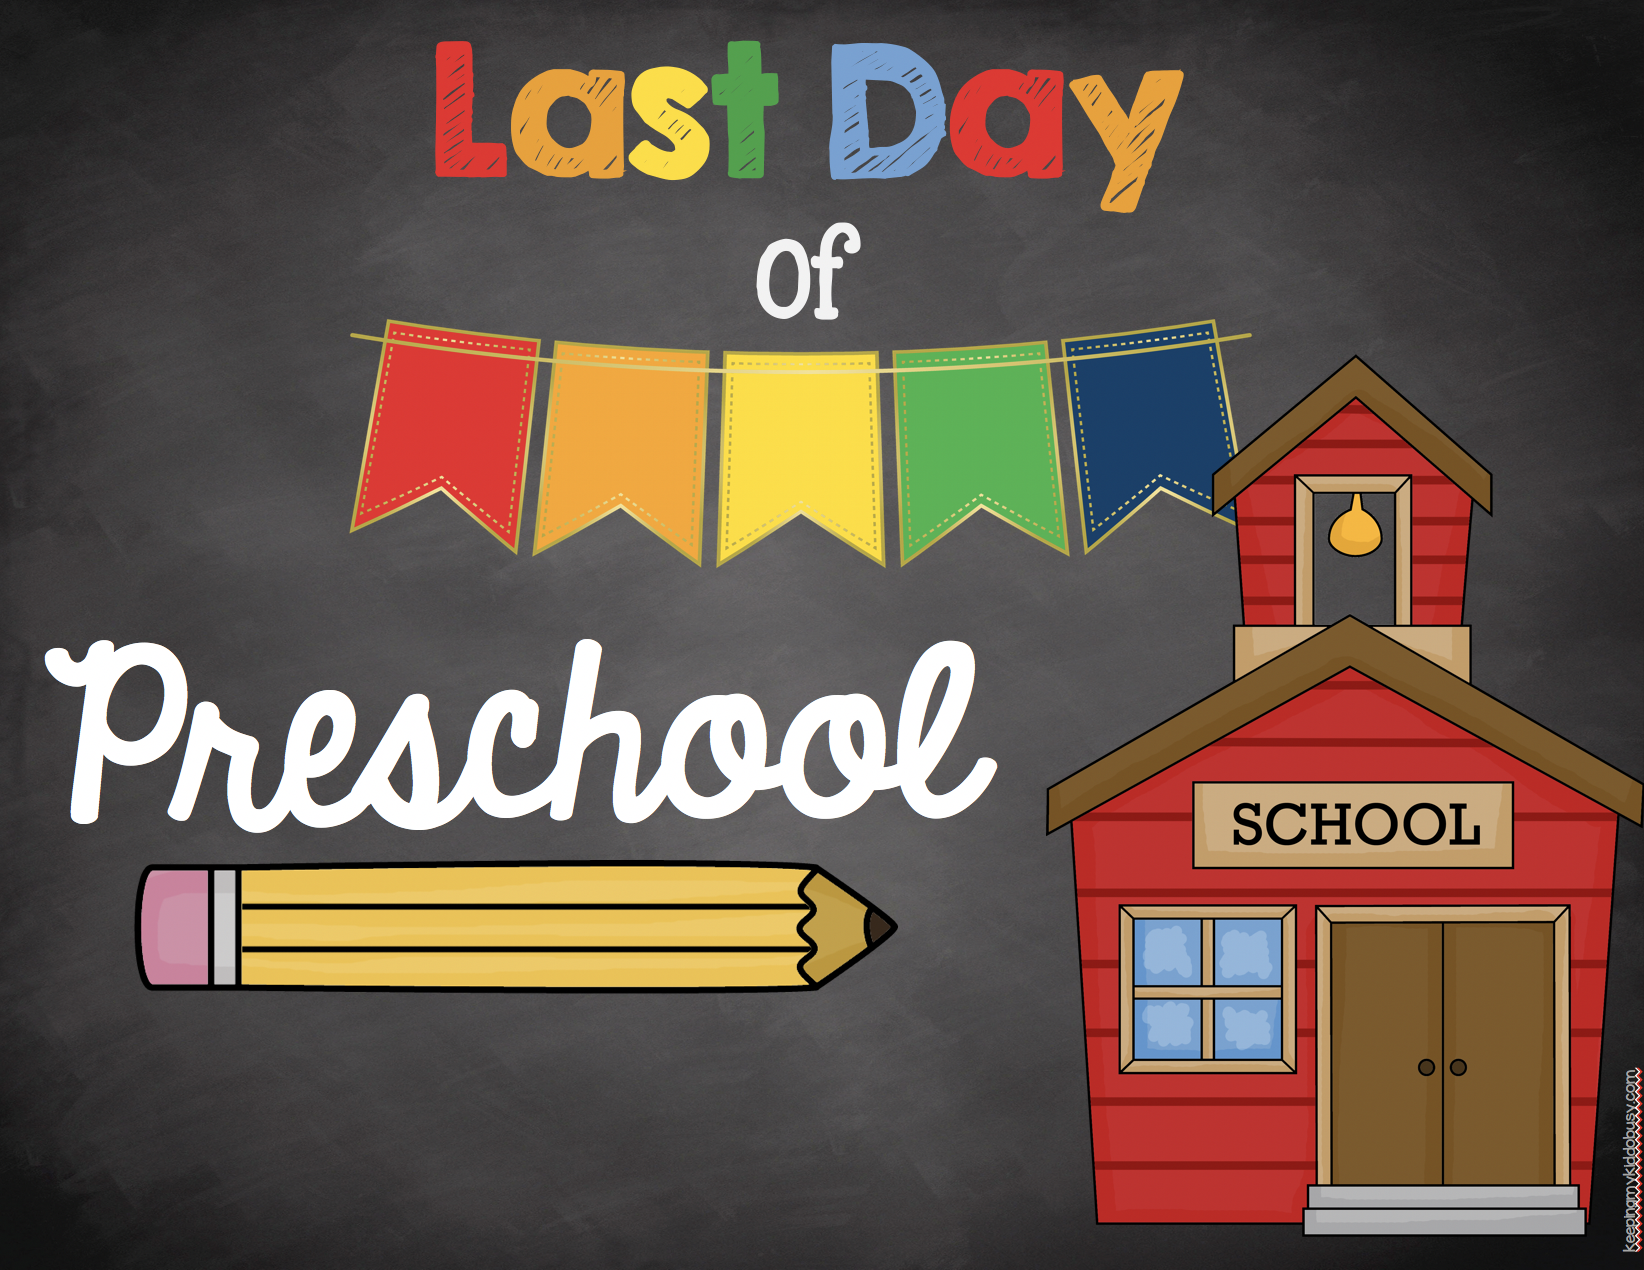 Last Day of Preschool 2021